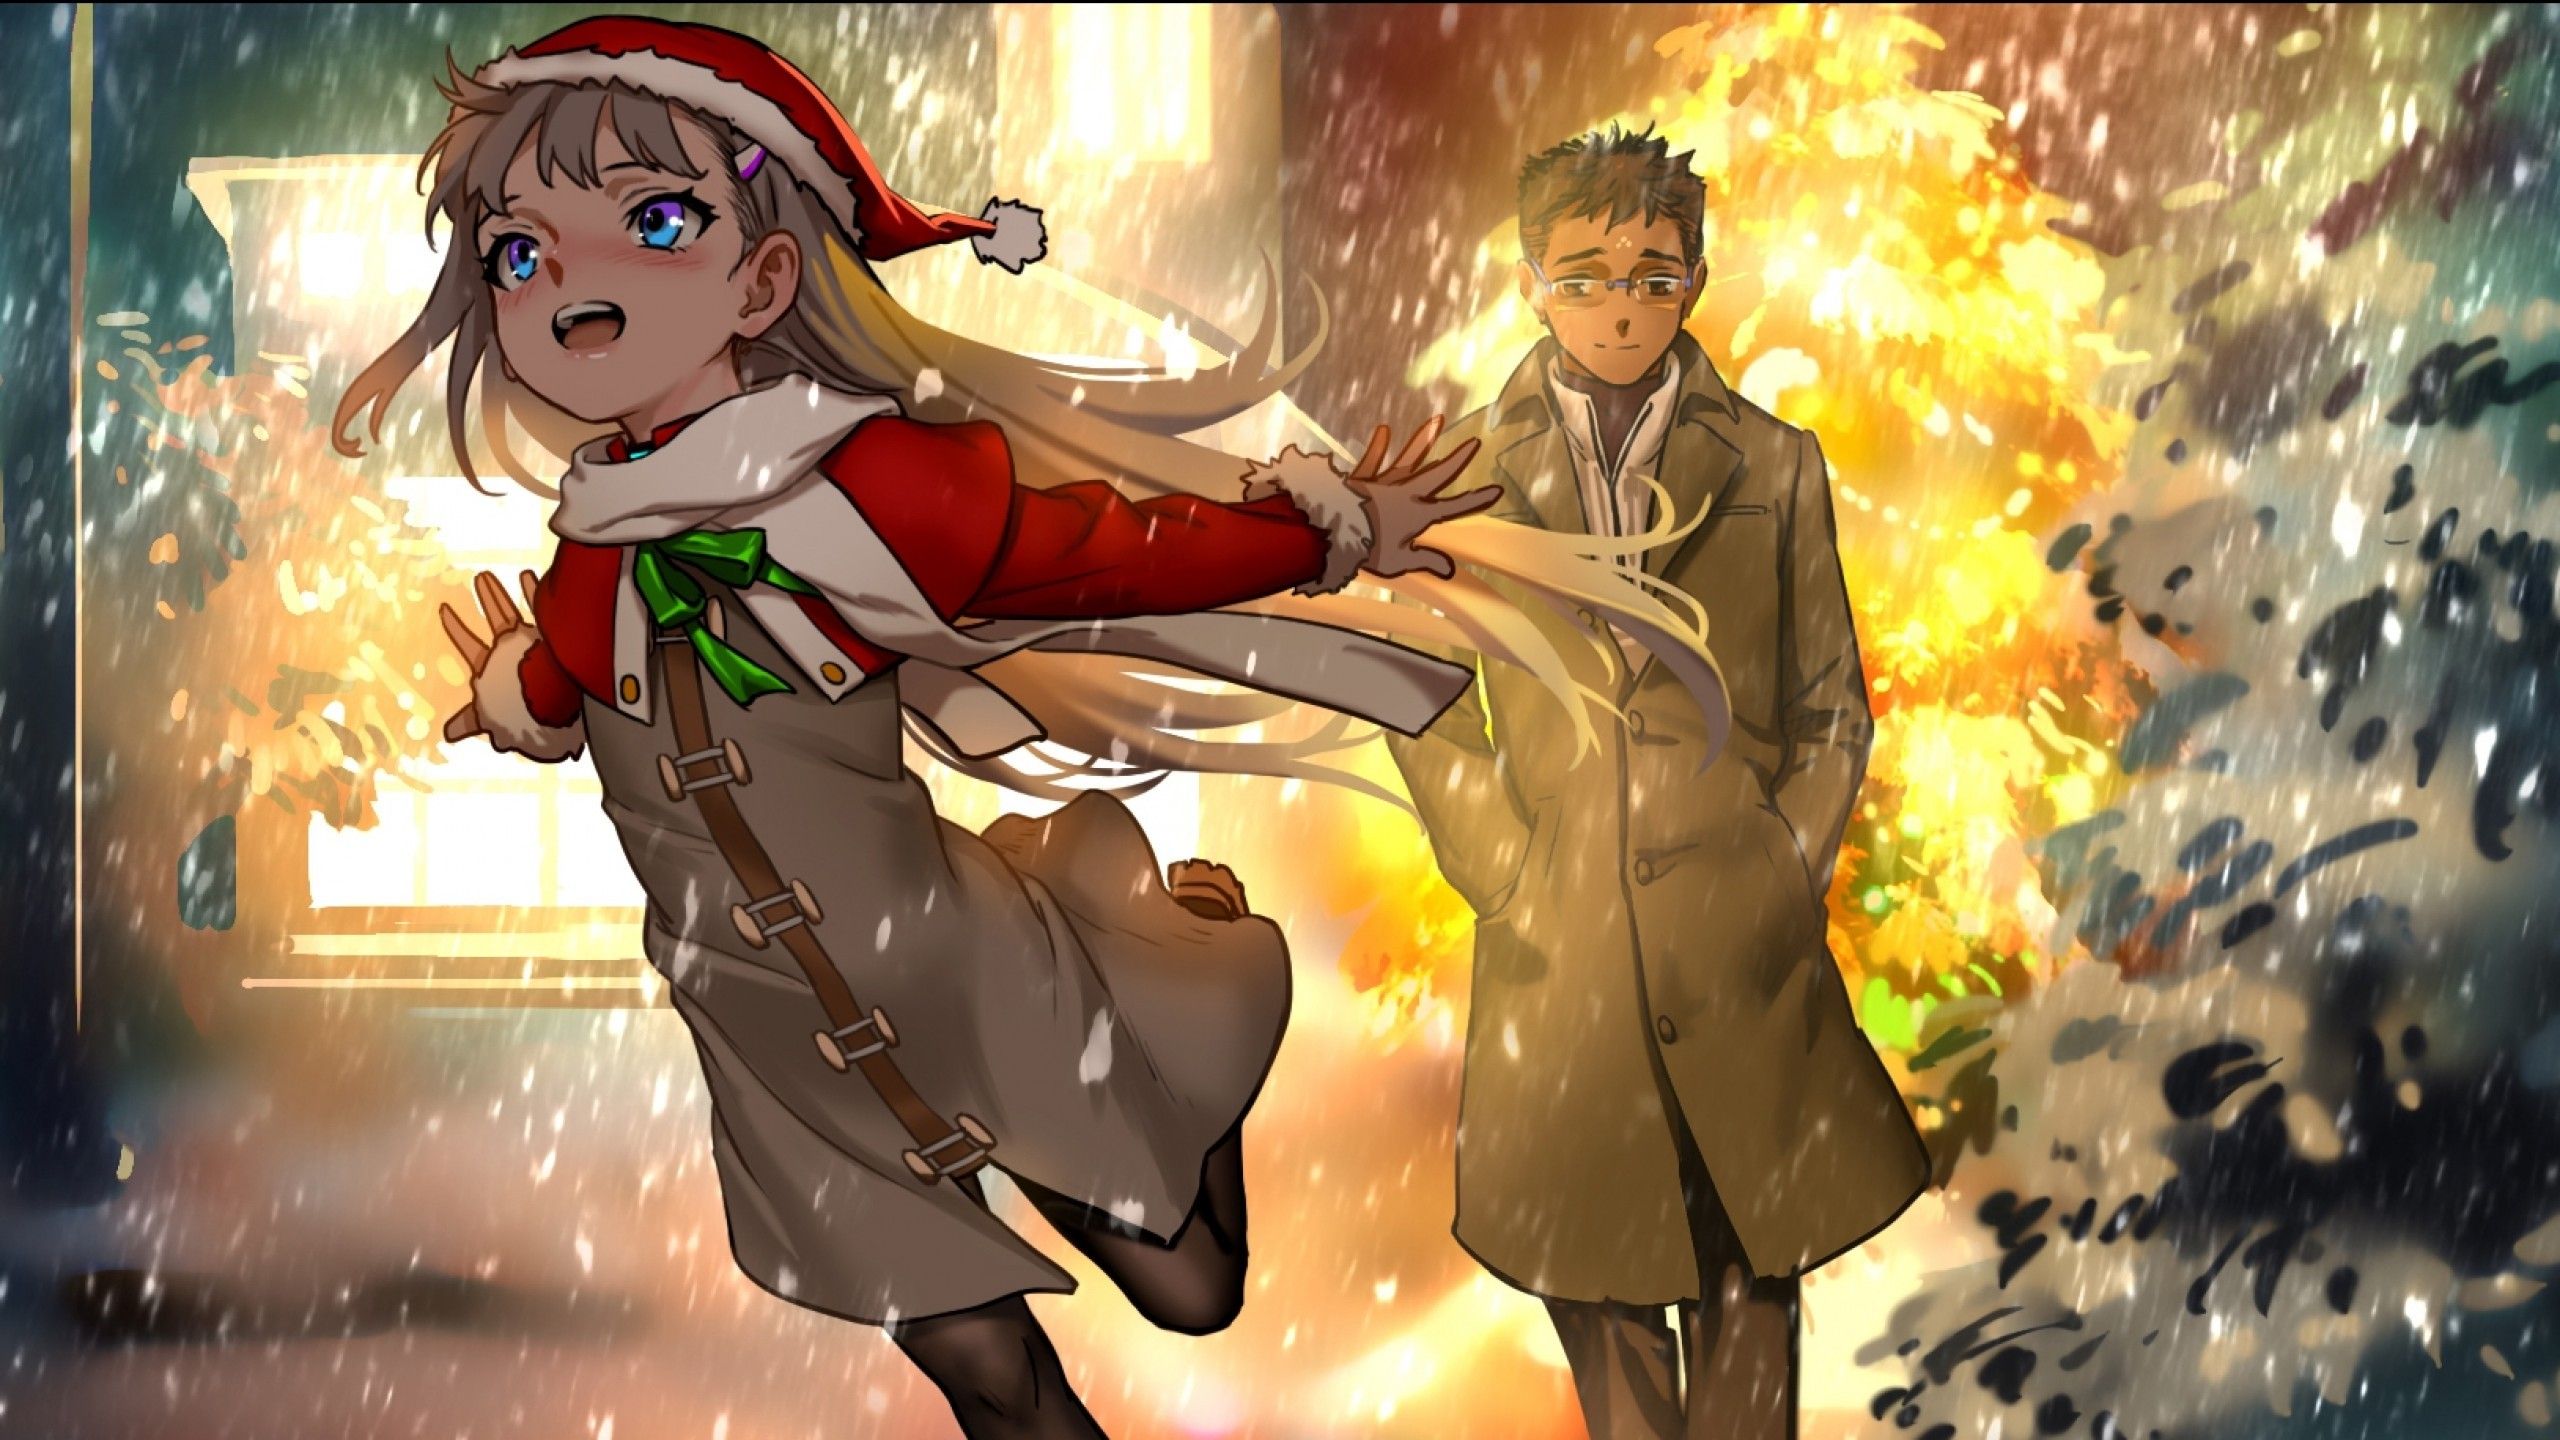 Download 2560x1440 Anime Girl And Boy, Christmas Snow, Winter, Loli Wallpaper for iMac 27 inch